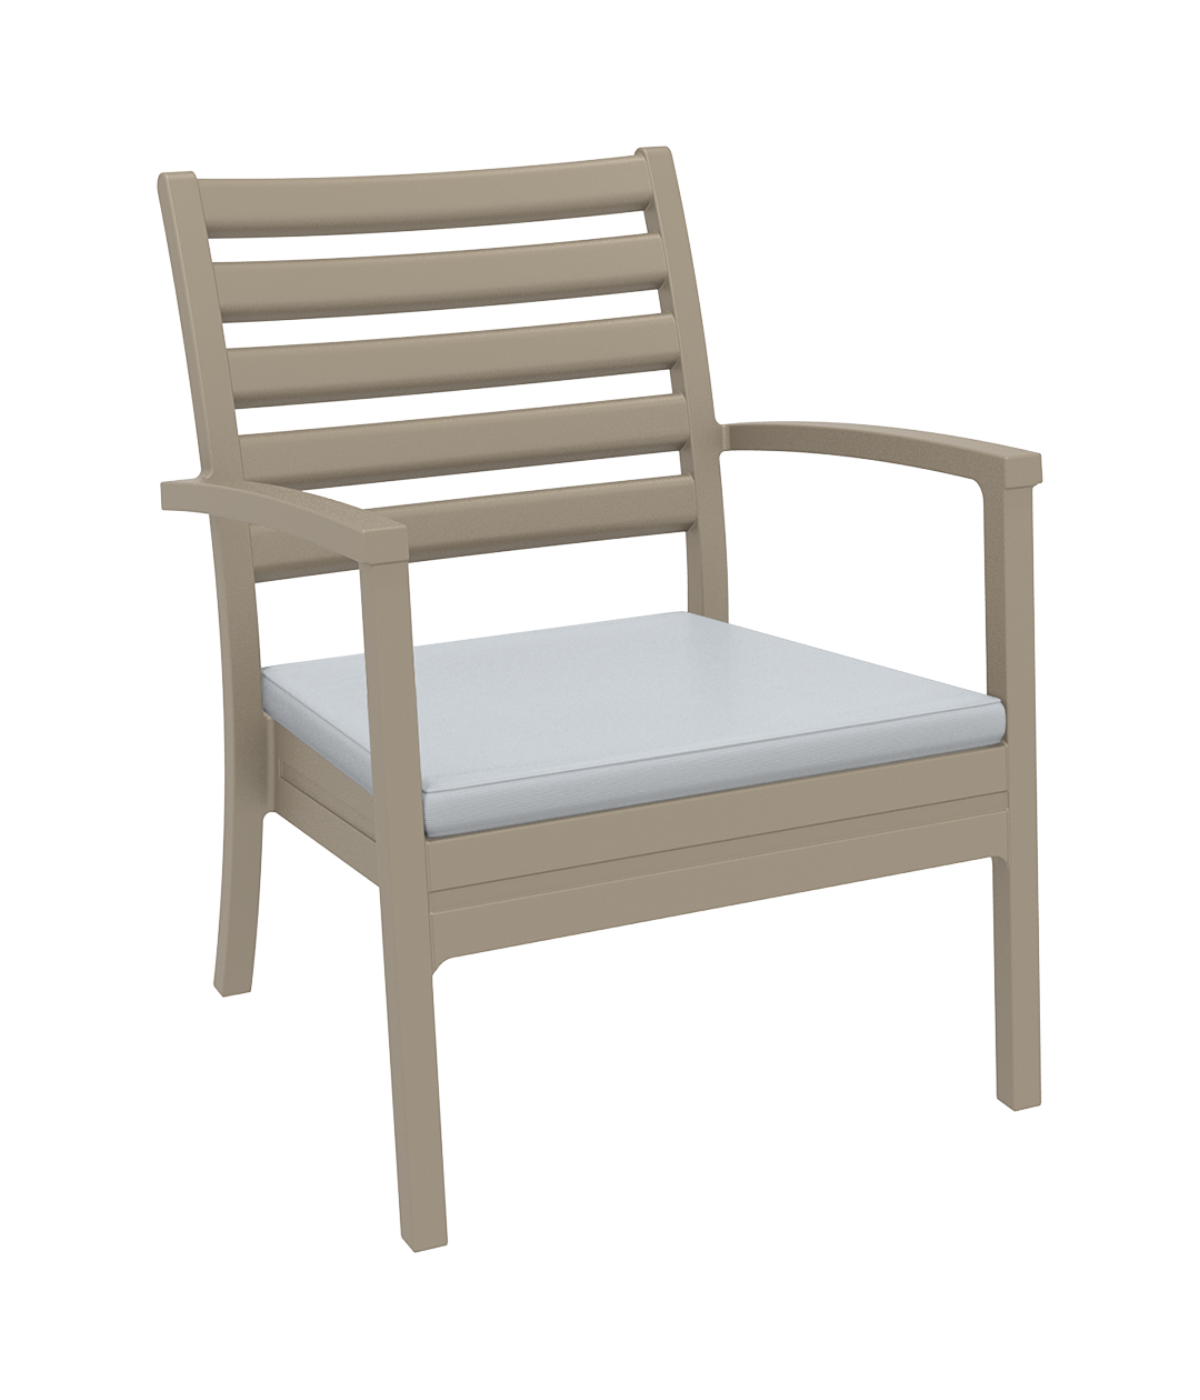 Artemis XL Seat Cushion